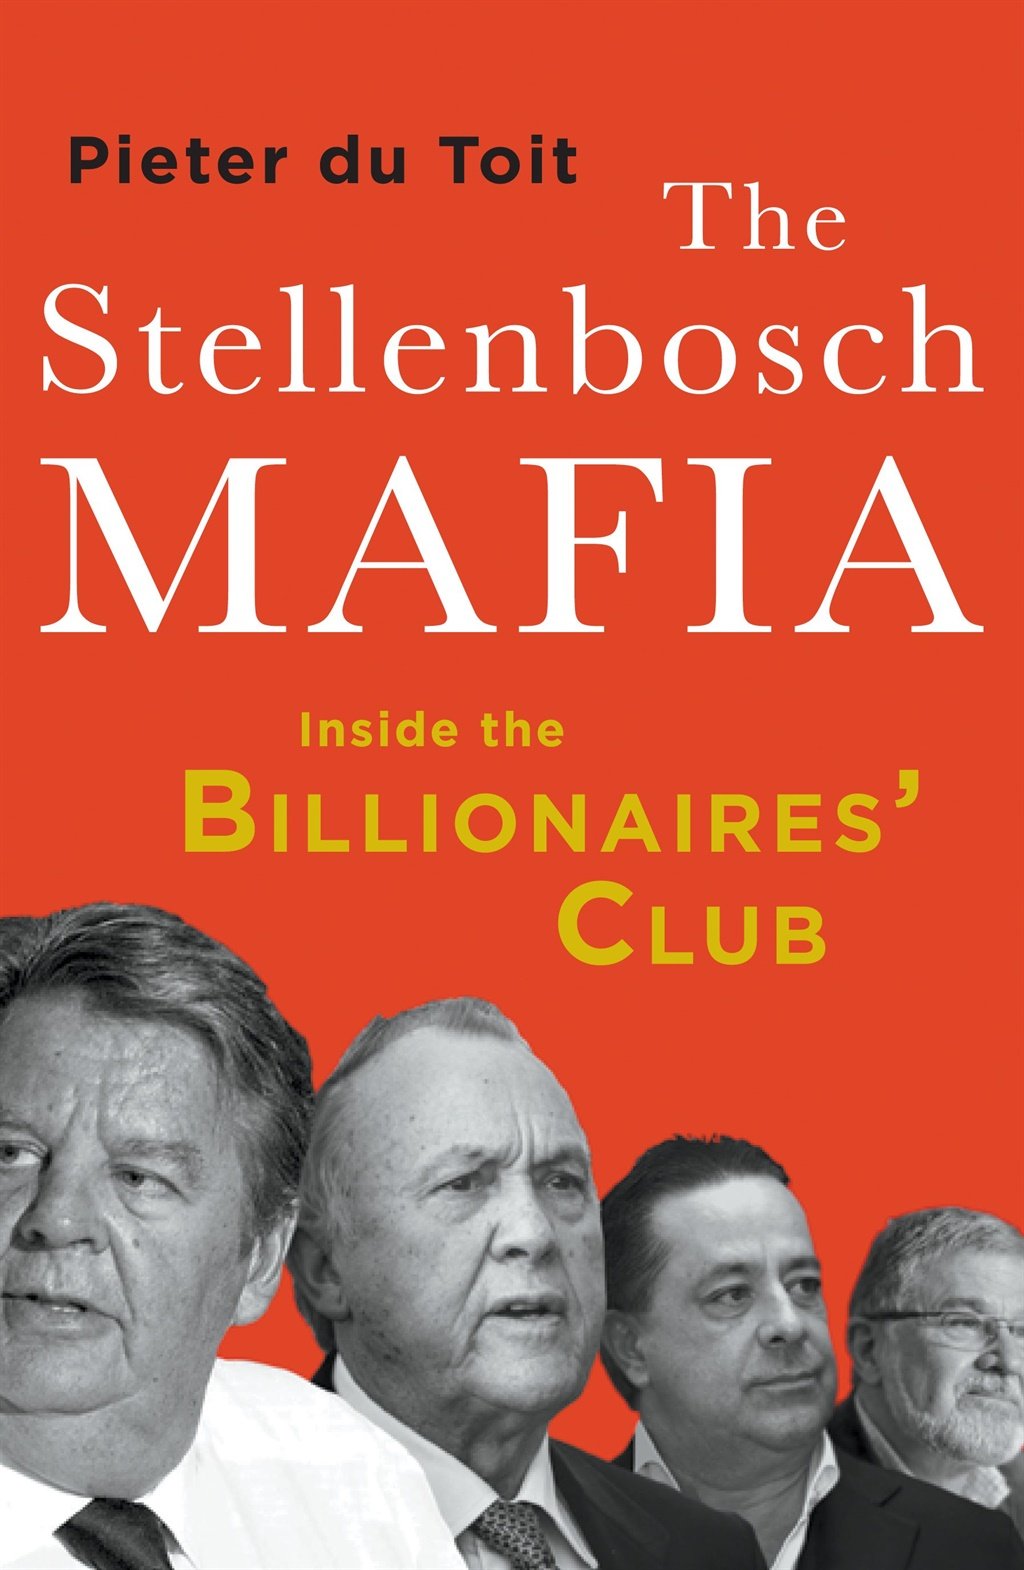 The Stellenbosch Mafia by Pieter du Toit, published by Jonathan Ball Publishers.